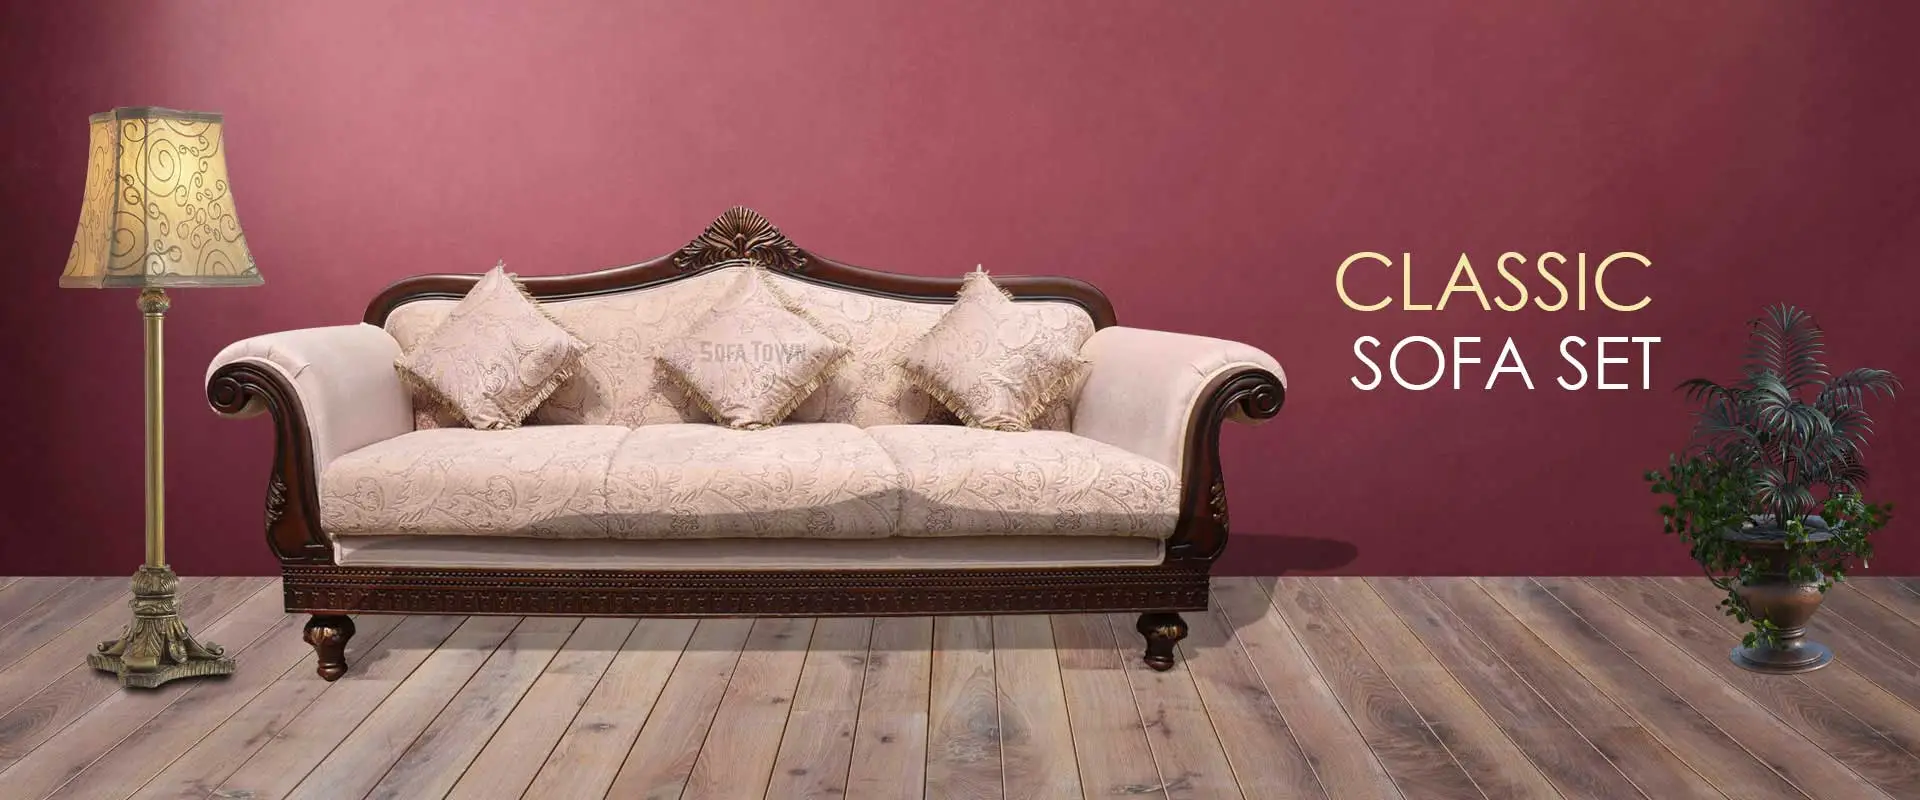 Classic Sofa Set  Manufacturers in Ghazipur